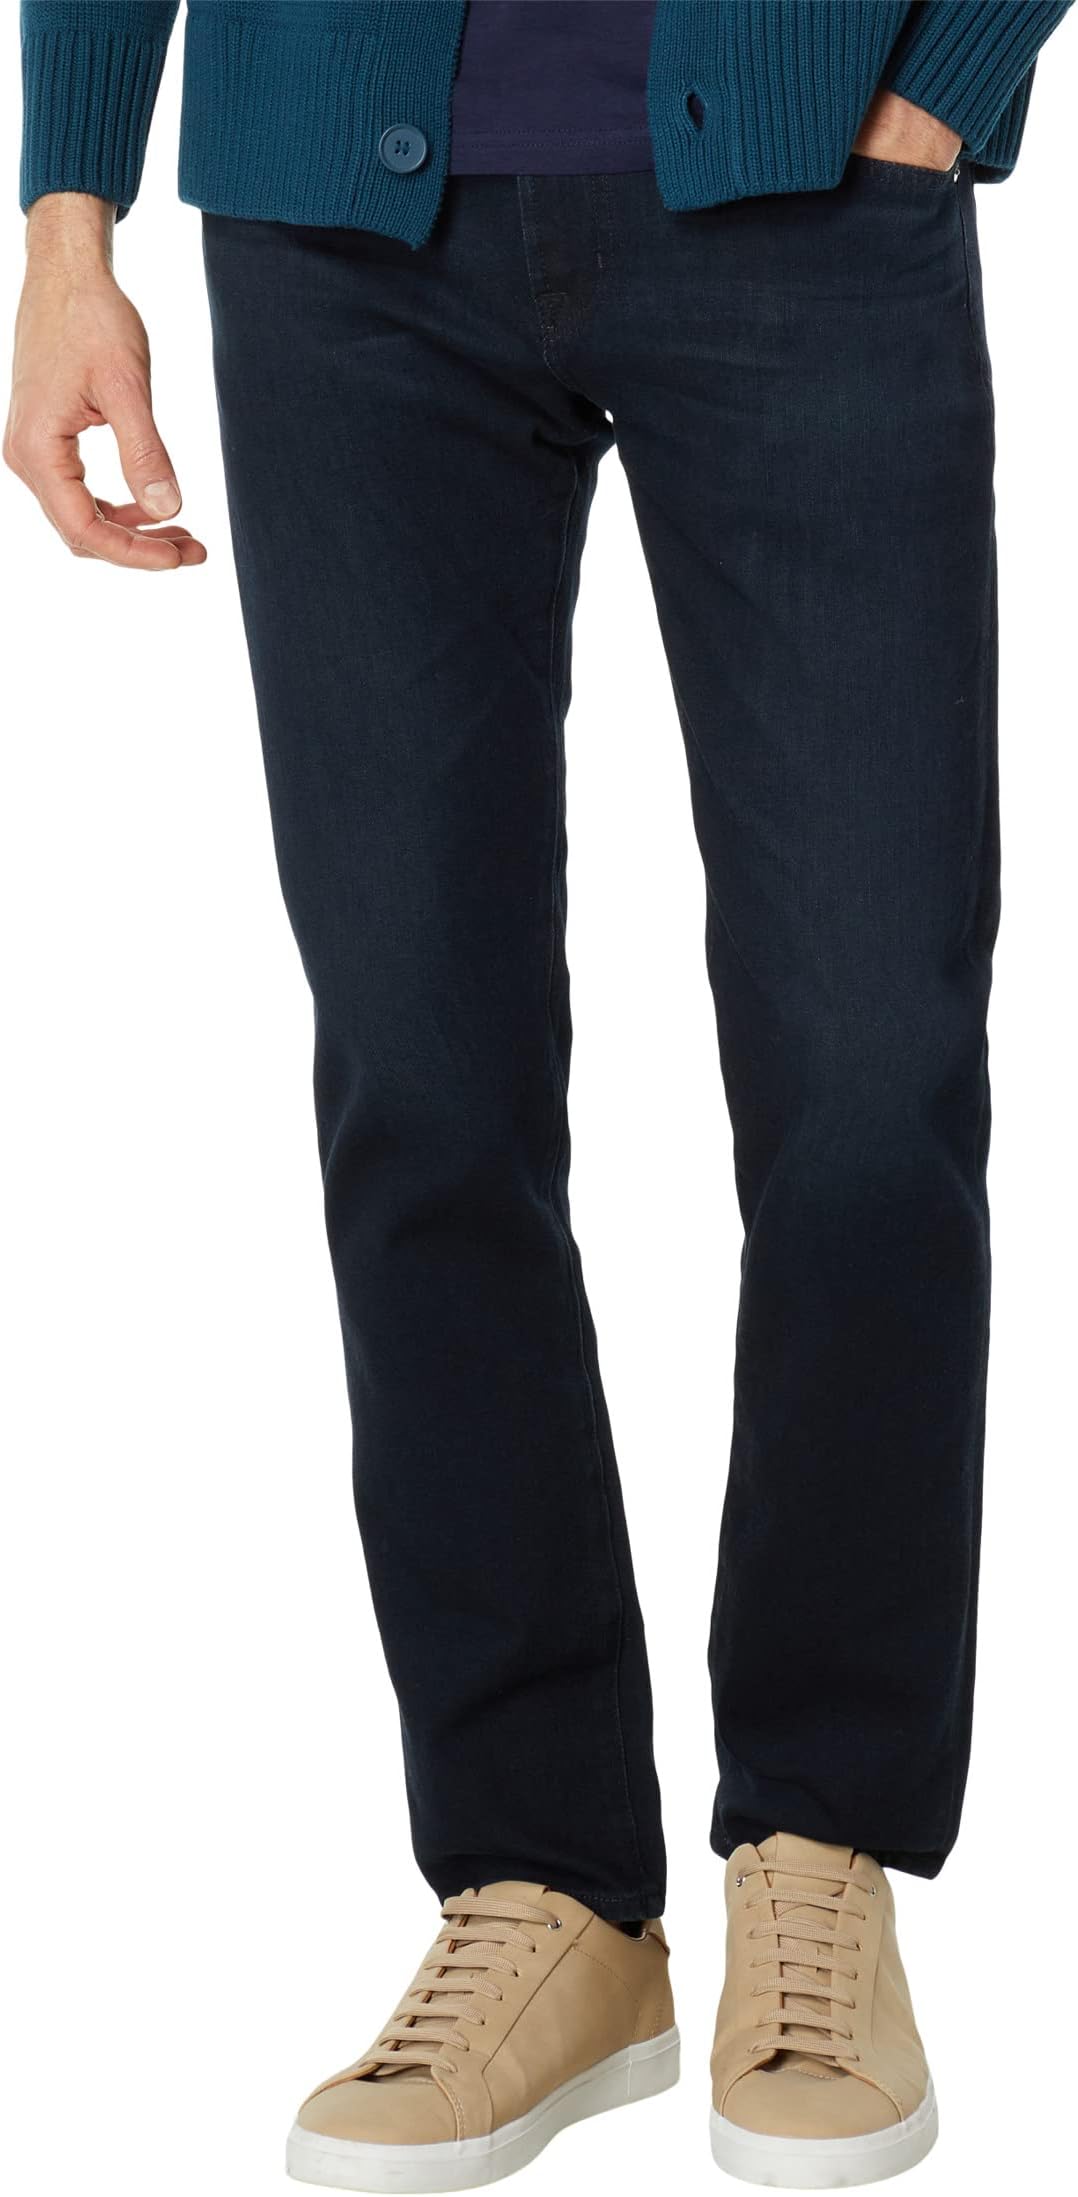 Джинсы Dylan Skinny Fit Jeans in Bundled AG Jeans, цвет Bundled джинсы эластичного прямого кроя everett ag jeans цвет bundled